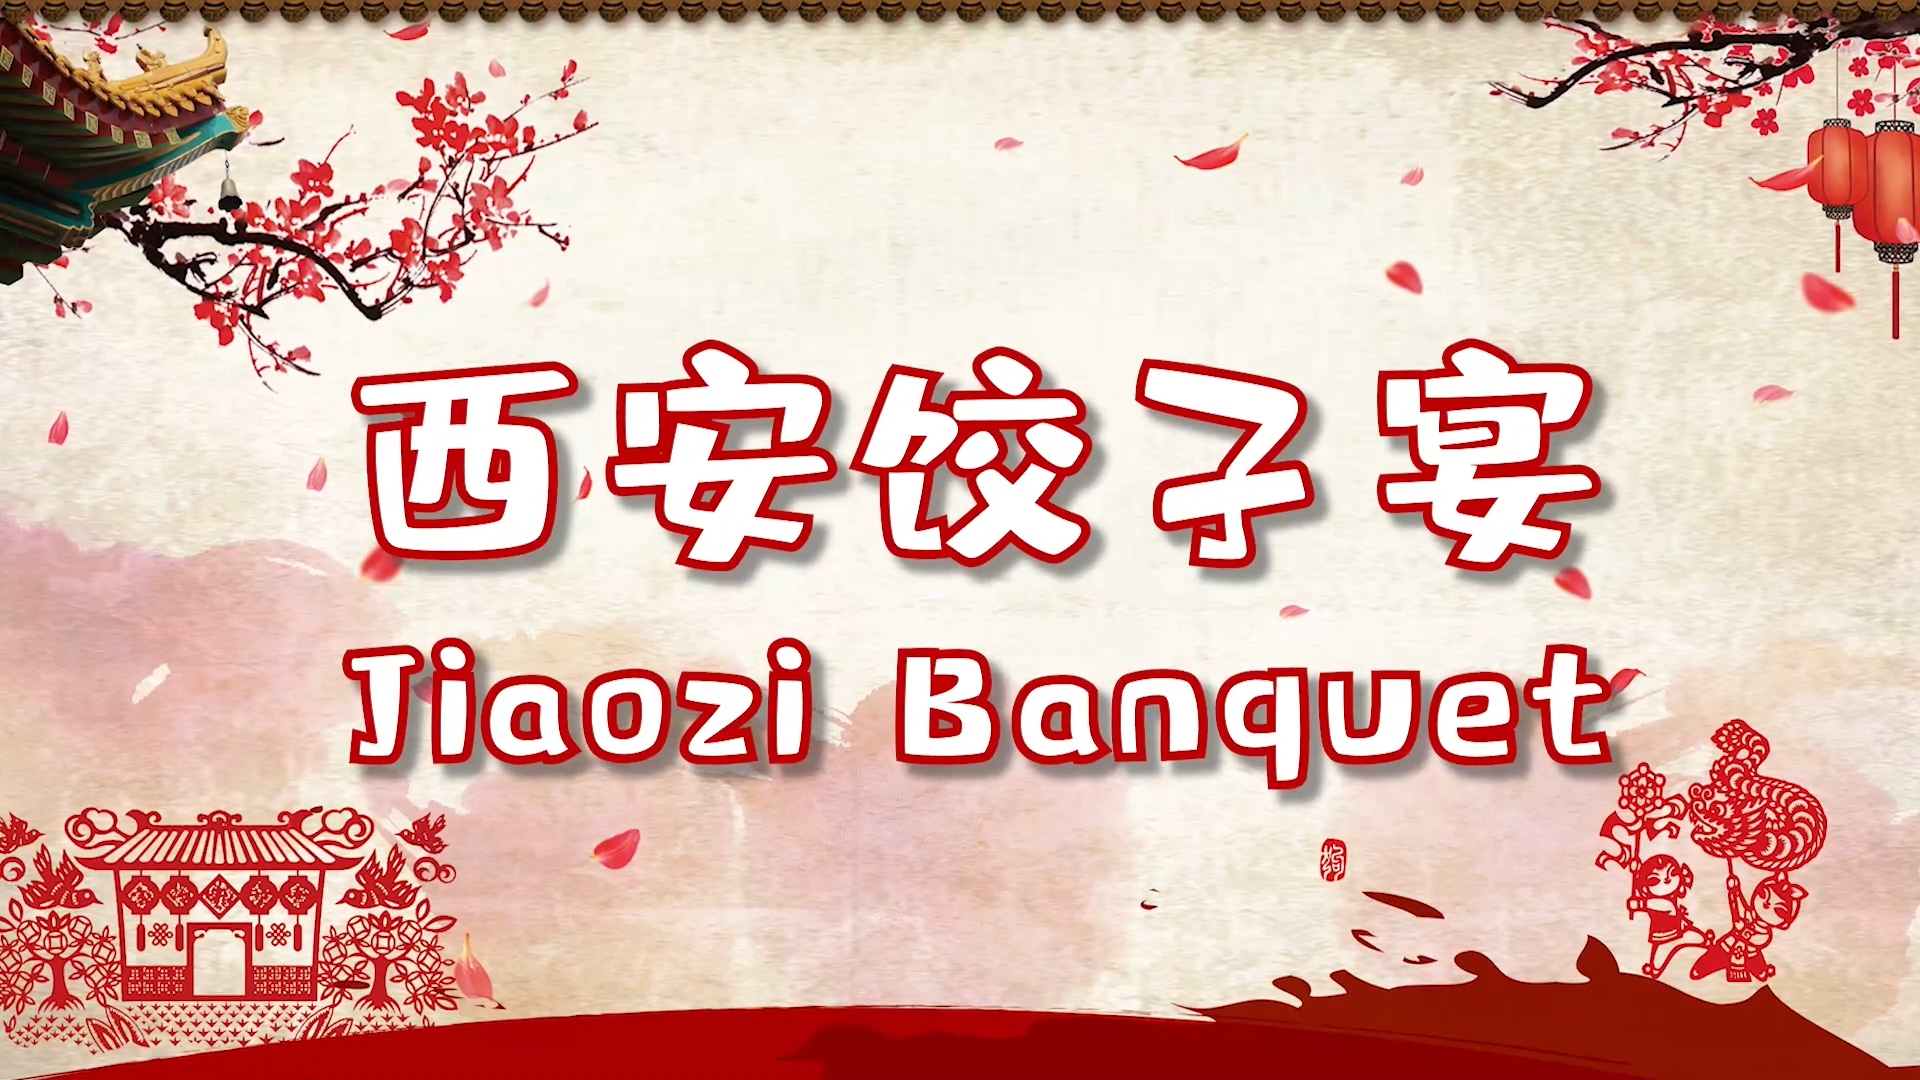 JiaoZi Banquet